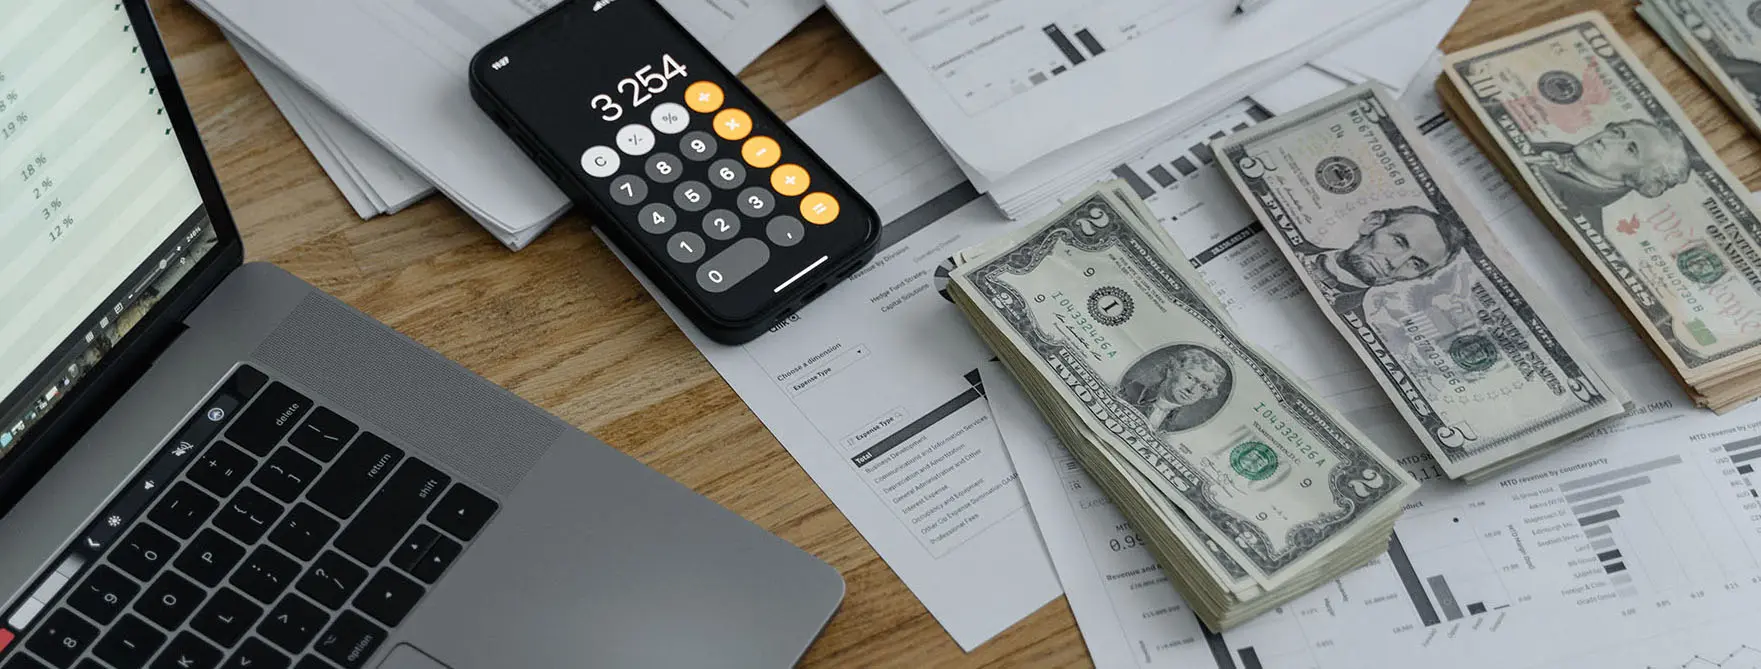 A computer, financial paperwork, piles of cash, and an iPhone calculator